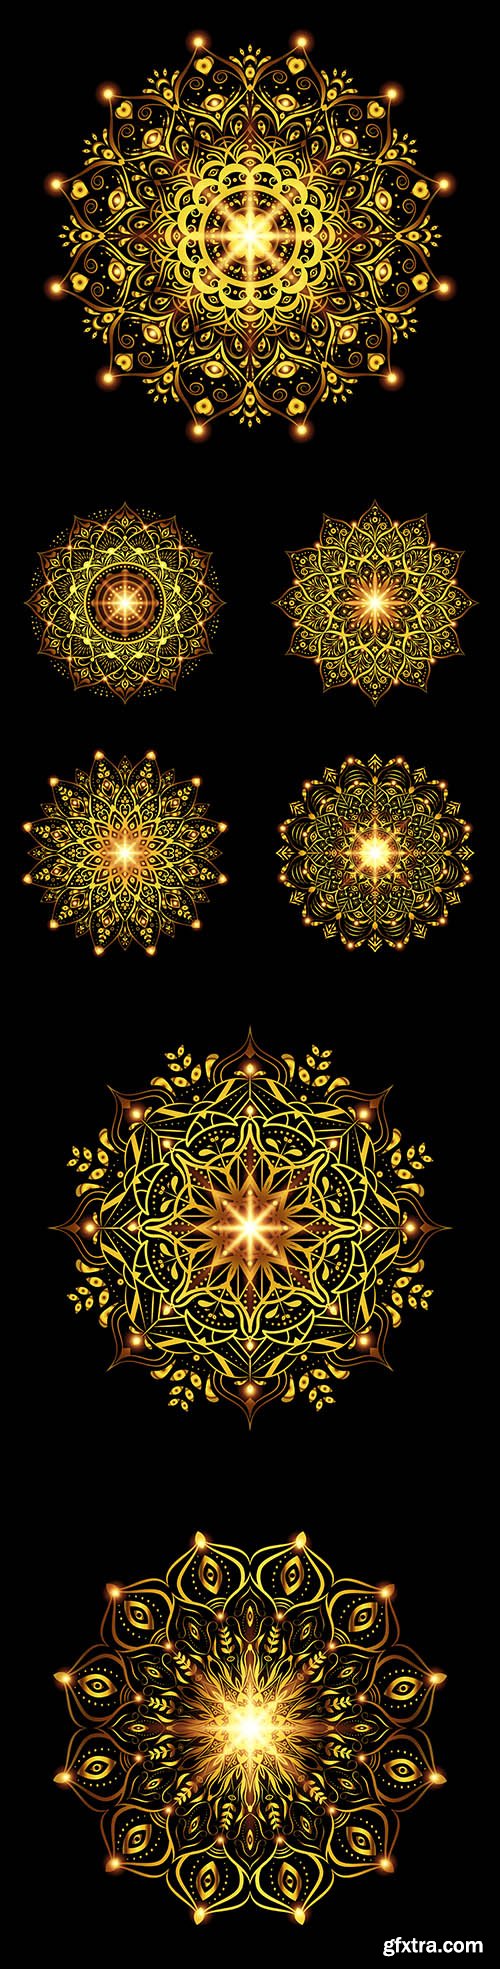 Mandala decorative gold ornament design